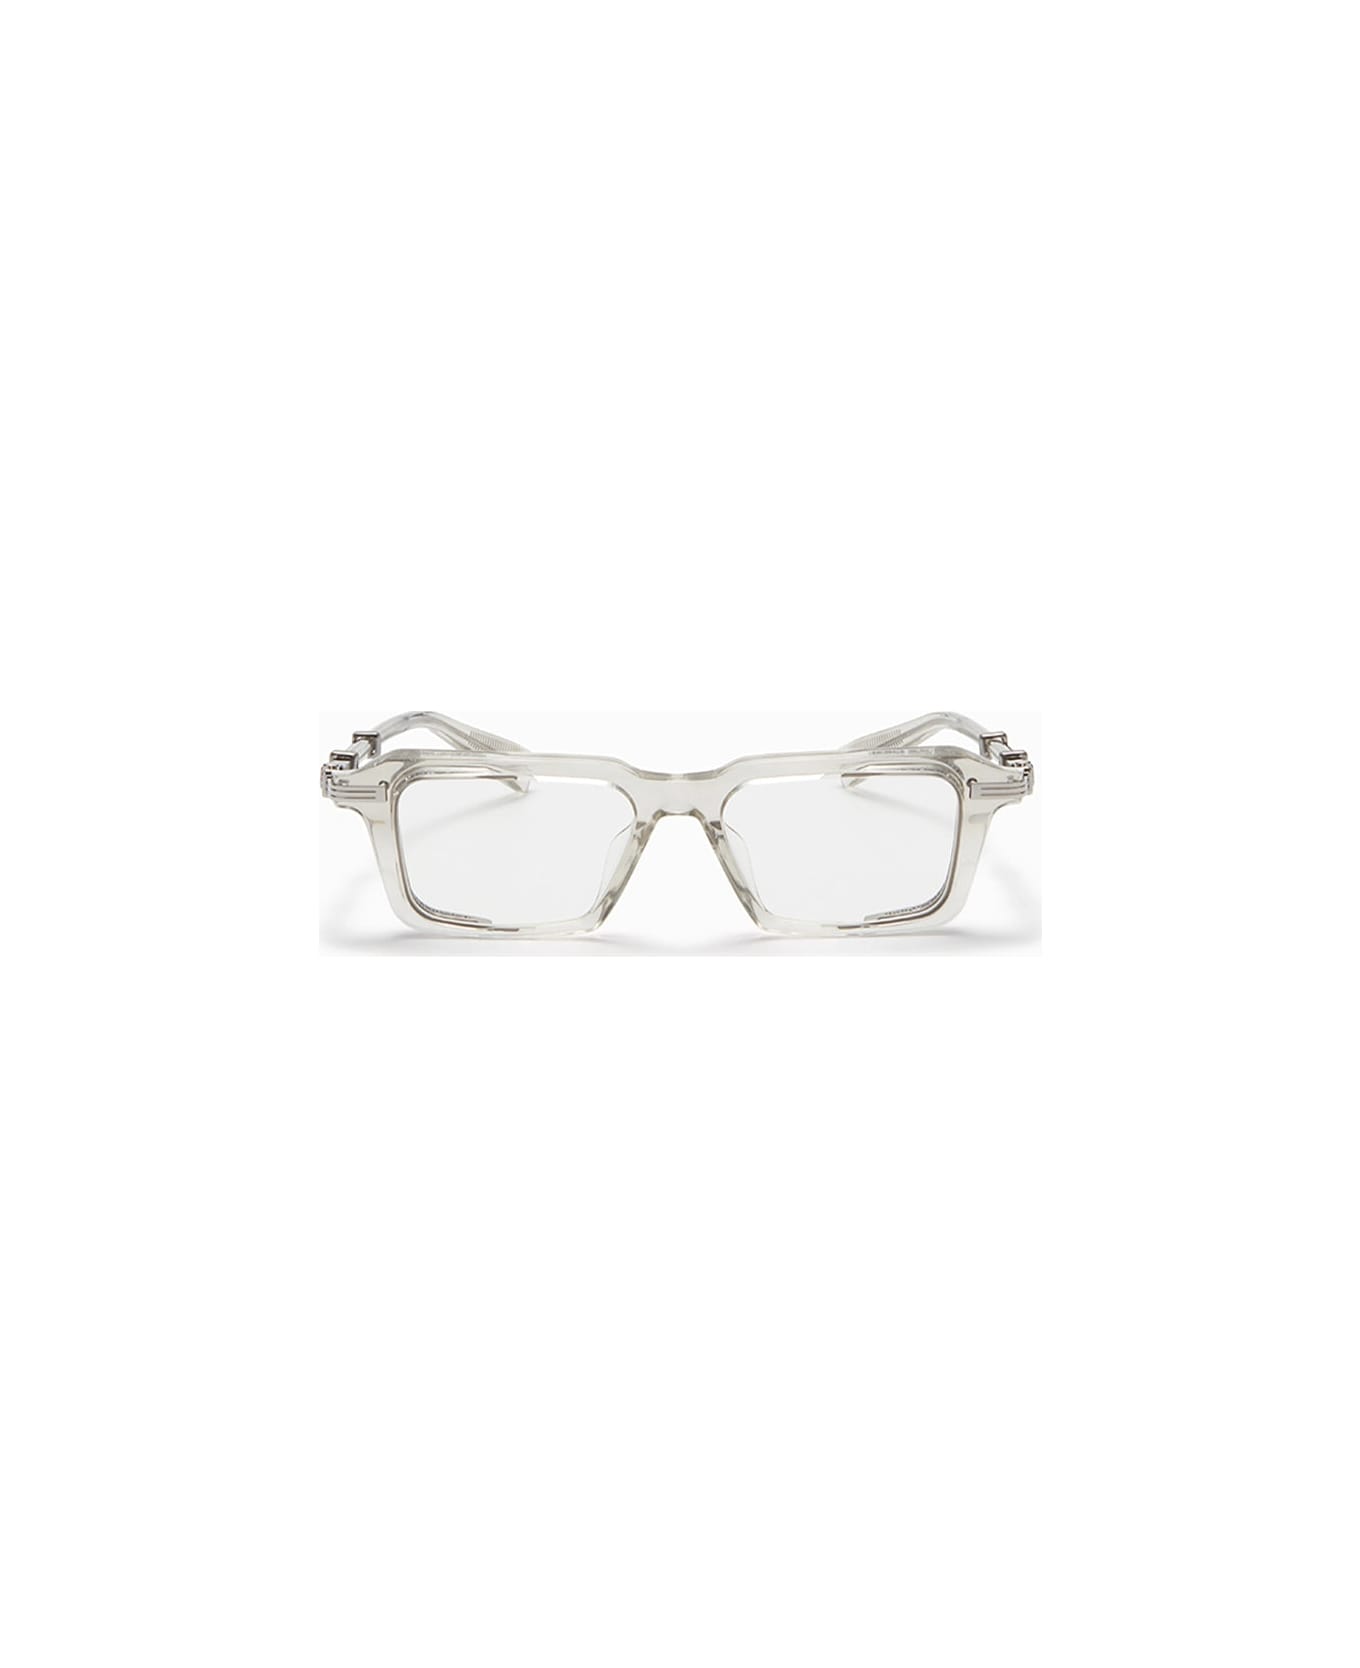 Balmain Legion Iii - Grey / Palladium Eyeglasses Glasses - transparent grey, palladium